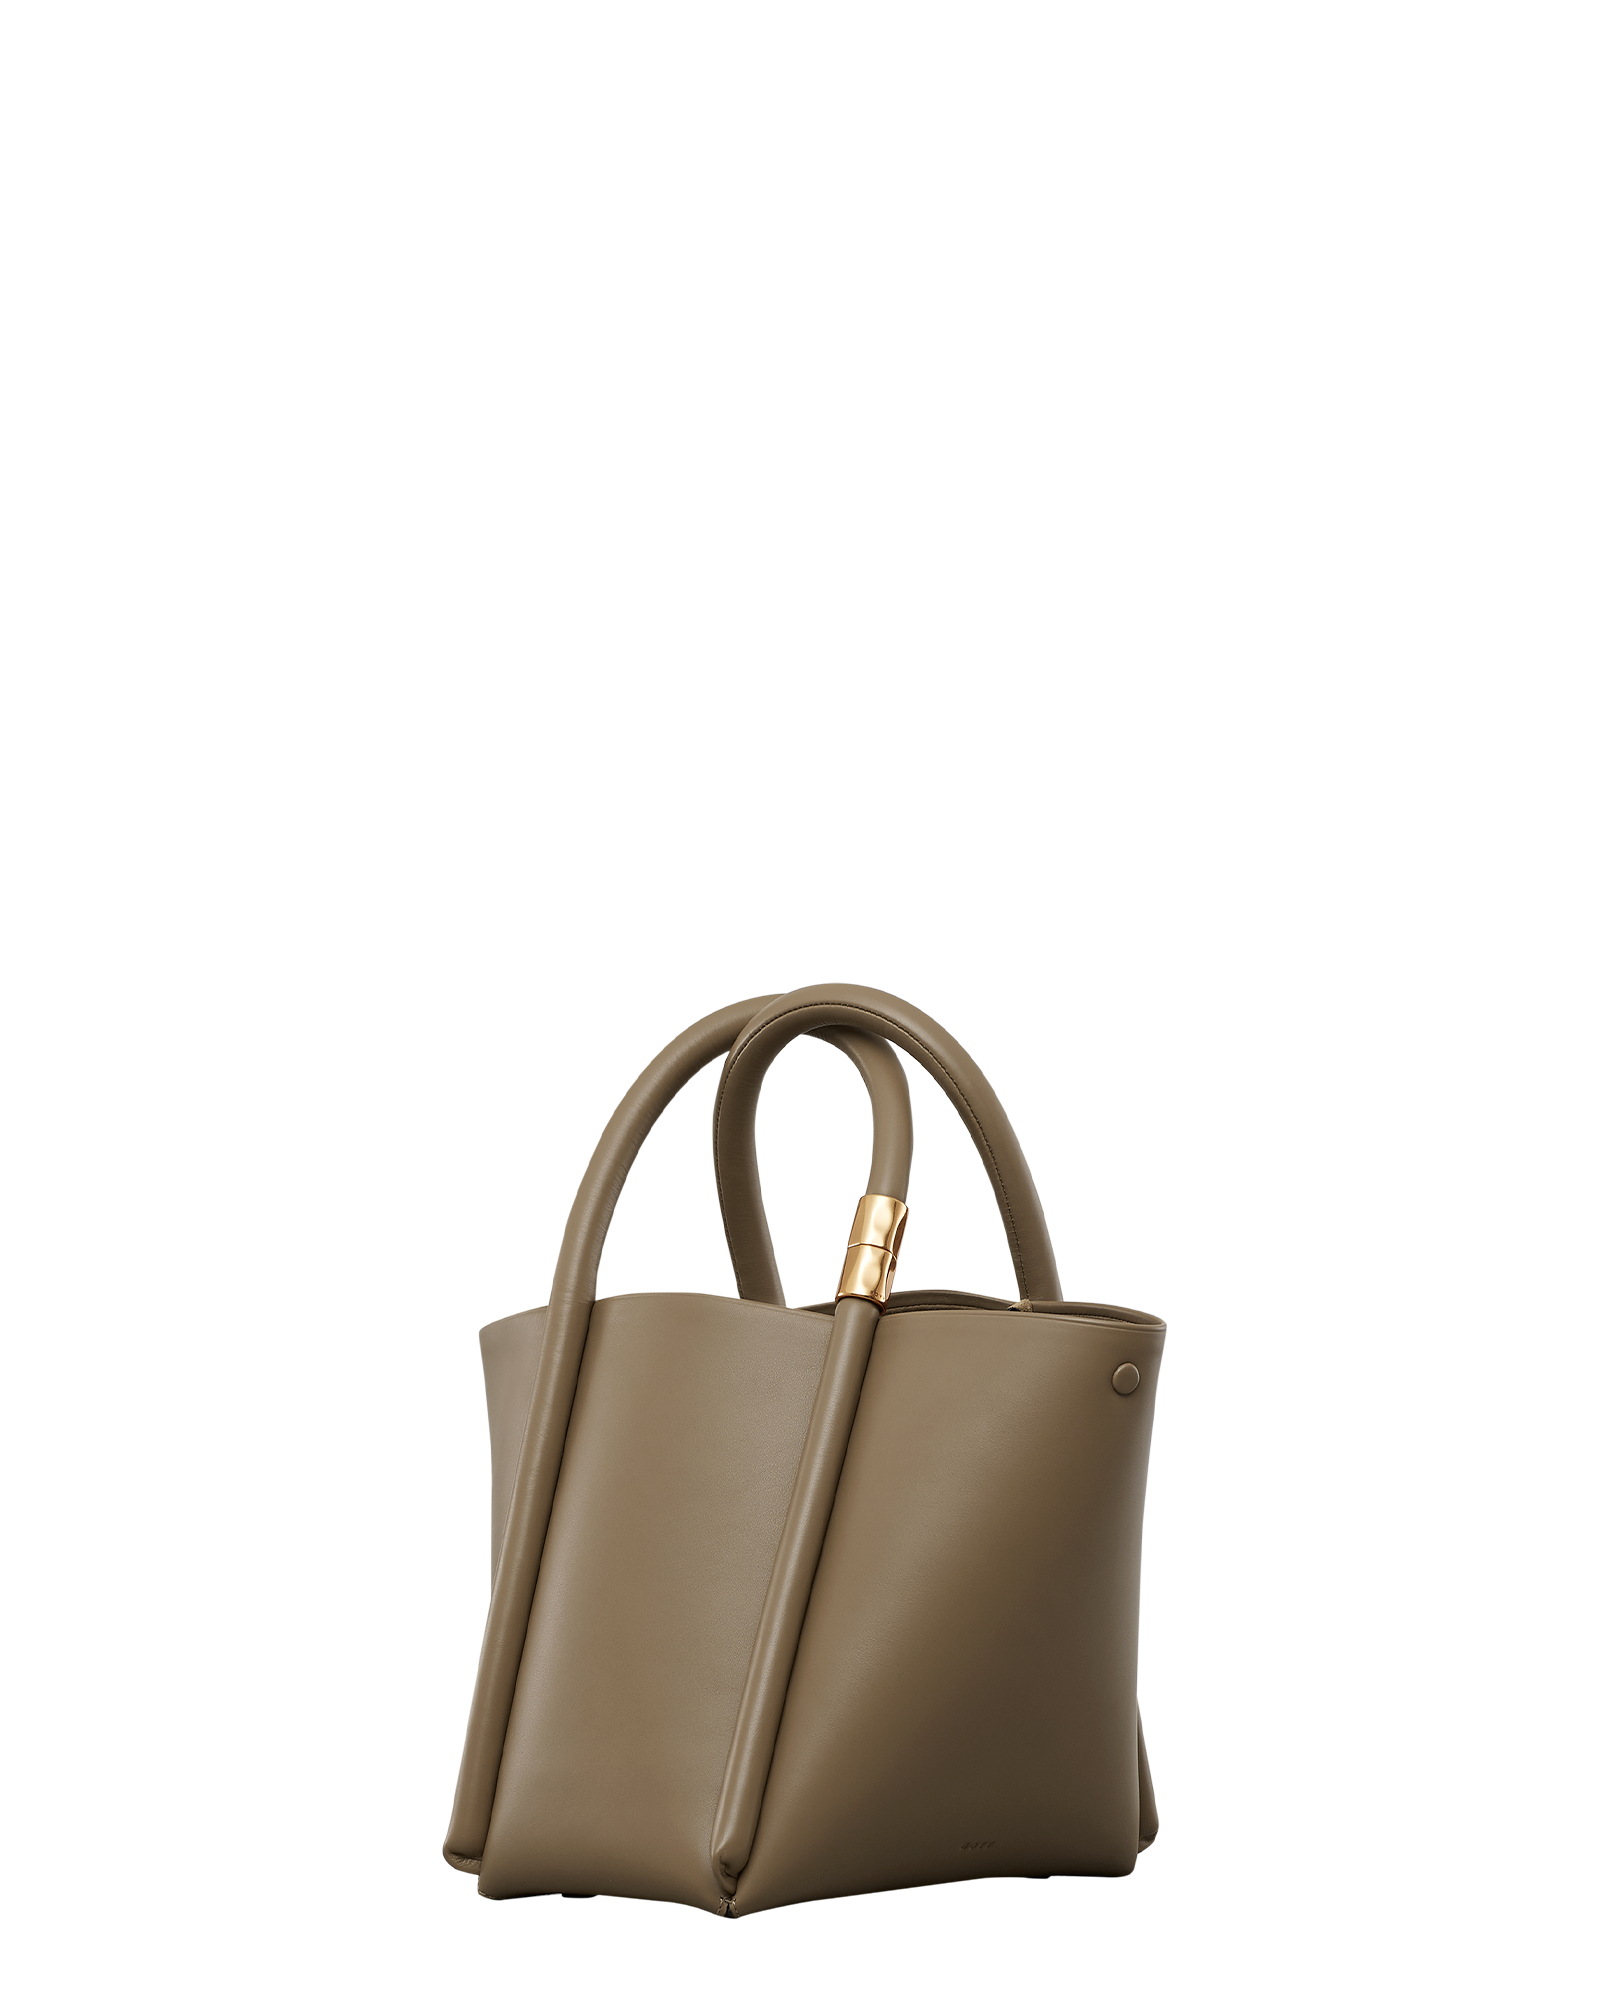 Boyy Romeo back black messenger purse clutch $900 | Clothes design,  Messenger purse, Fashion